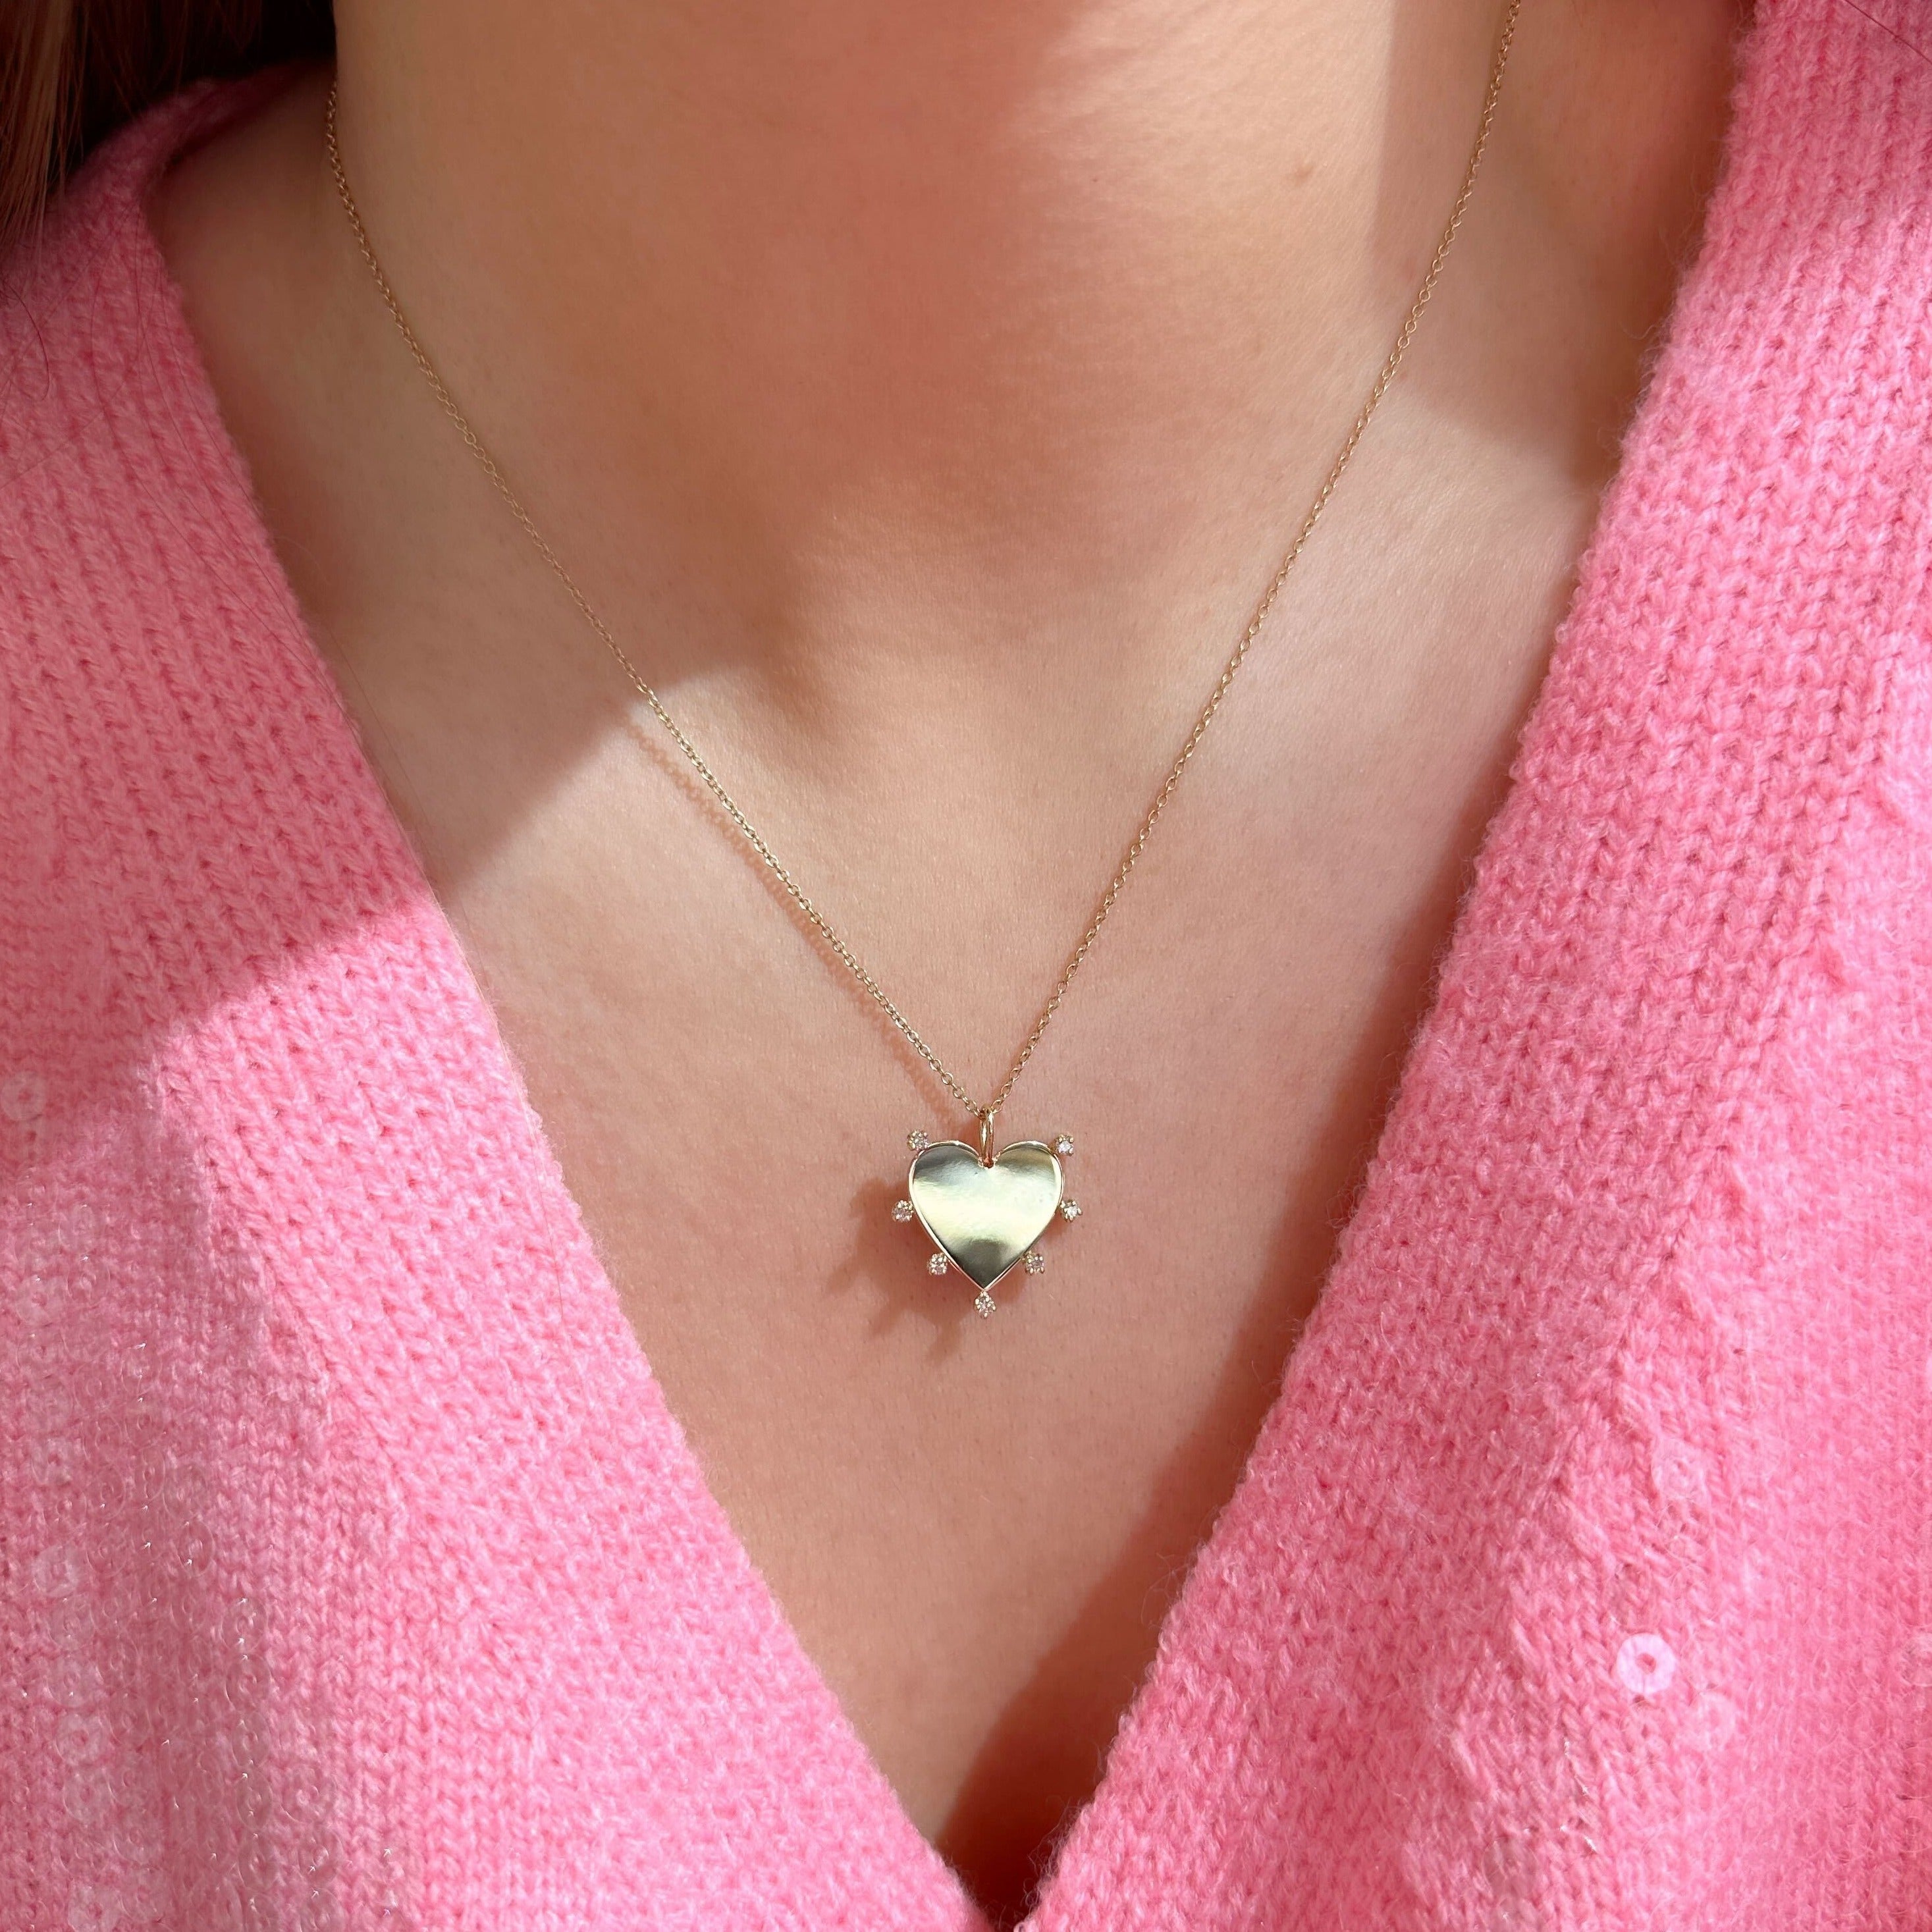 7 Prong Diamond Heart Pendant Necklace